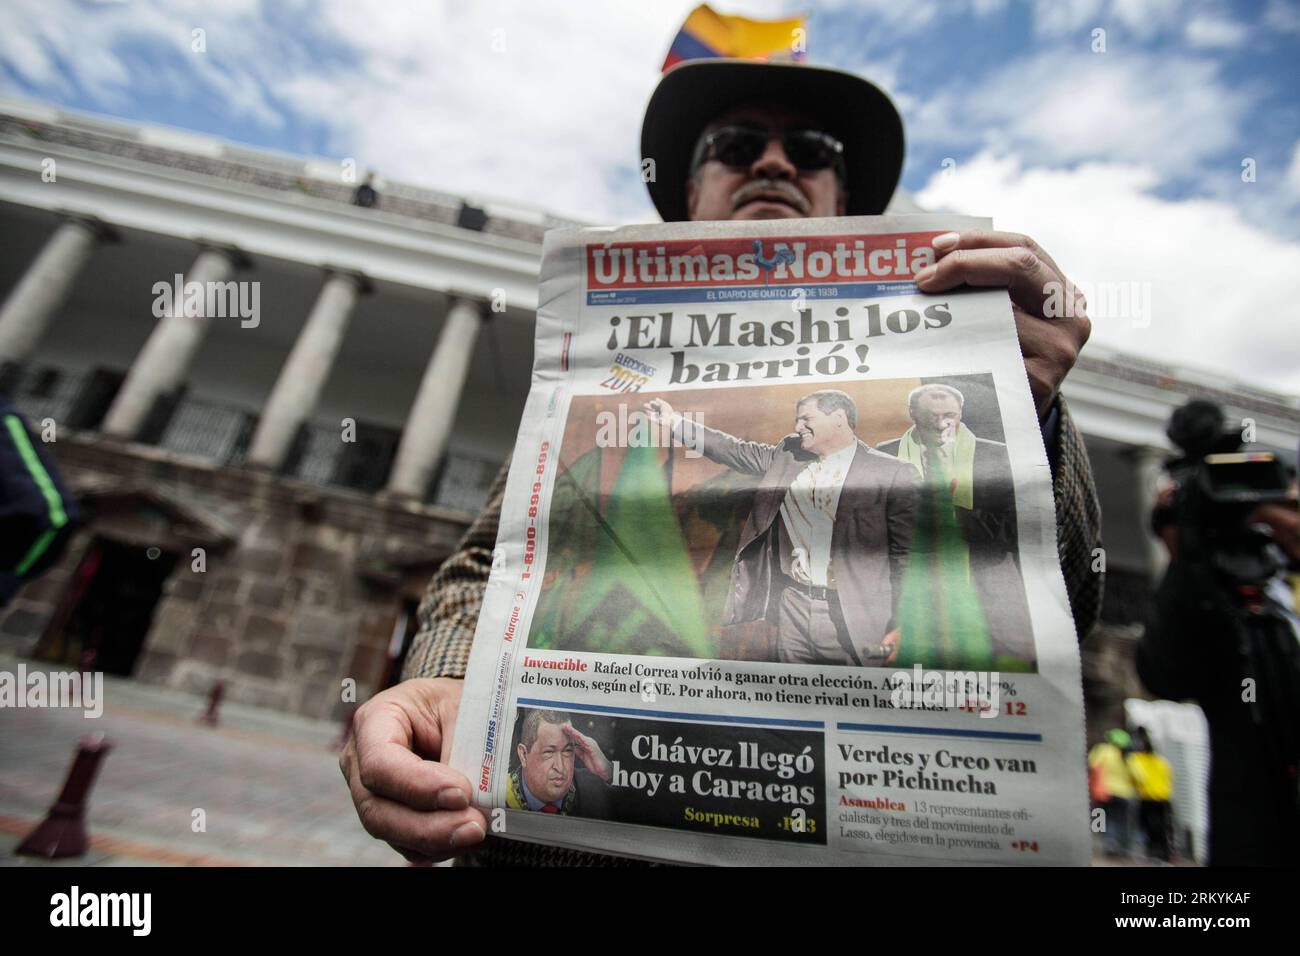 Bildnummer: 59237543  Datum: 18.02.2013  Copyright: imago/Xinhua (130218) -- QUITO, Feb. 18, 2013 (Xinhua) -- A resident shows a newspaper in front of Carondelet presidential palace in Quito, Ecuador, on Feb. 18, 2013. Ecuadorian President Rafael Correa was re-elected in Sunday s elections. (Xinhua/Jhon Paz) ECUADOR-QUITO-POLITICS-CORREA PUBLICATIONxNOTxINxCHN Politik Gesellschaft Wahl Präsidentschaftswahl Feier Wahlsieg Anhänger Sieg premiumd x0x xac 2013 quer      59237543 Date 18 02 2013 Copyright Imago XINHUA  Quito Feb 18 2013 XINHUA a Resident Shows a Newspaper in Front of Carondelet Pre Stock Photo